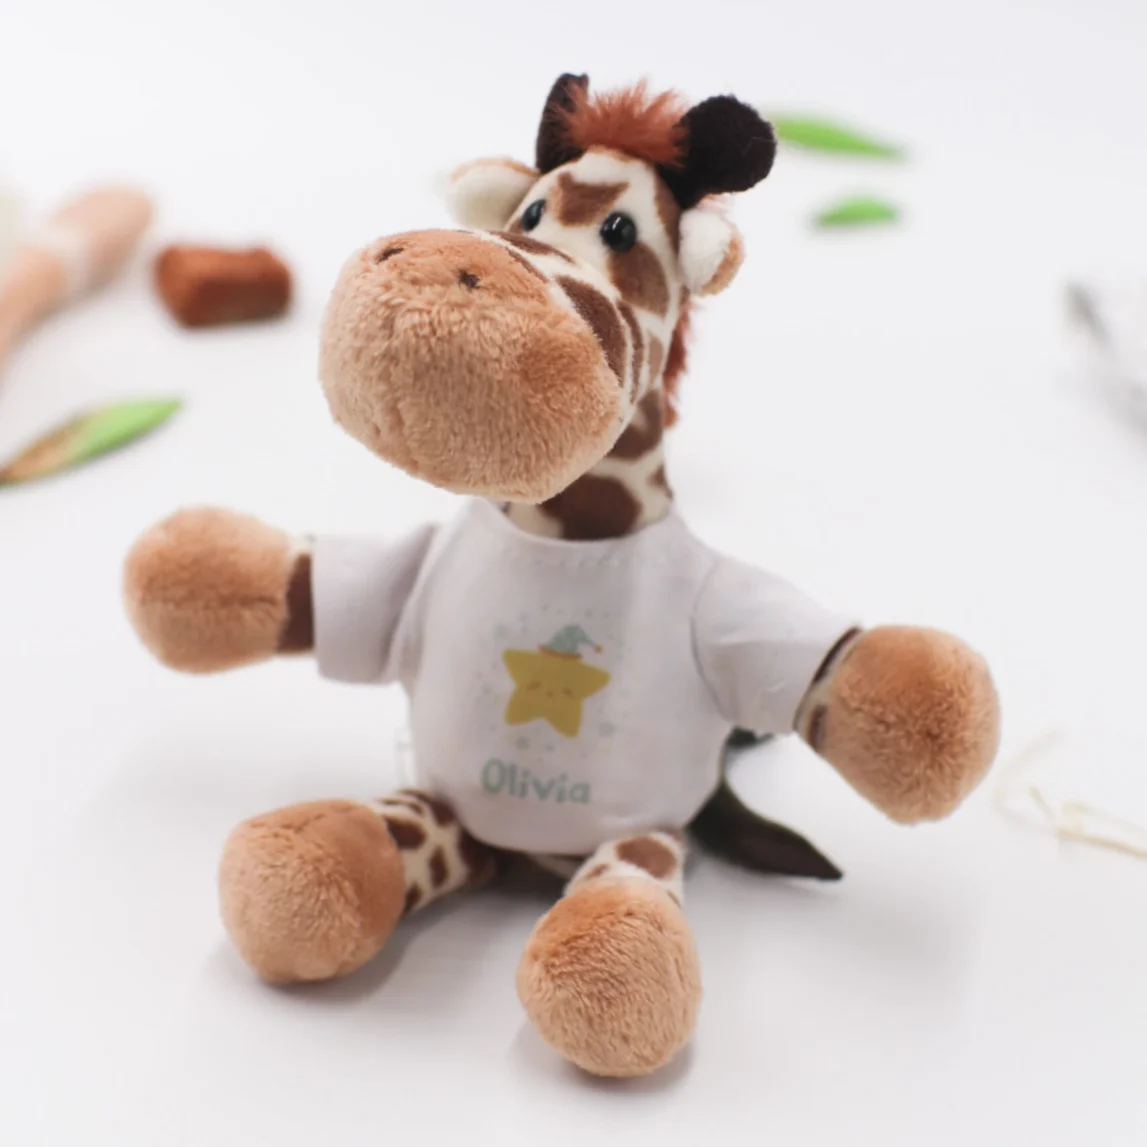 Small stuffed Giraffe toy for children